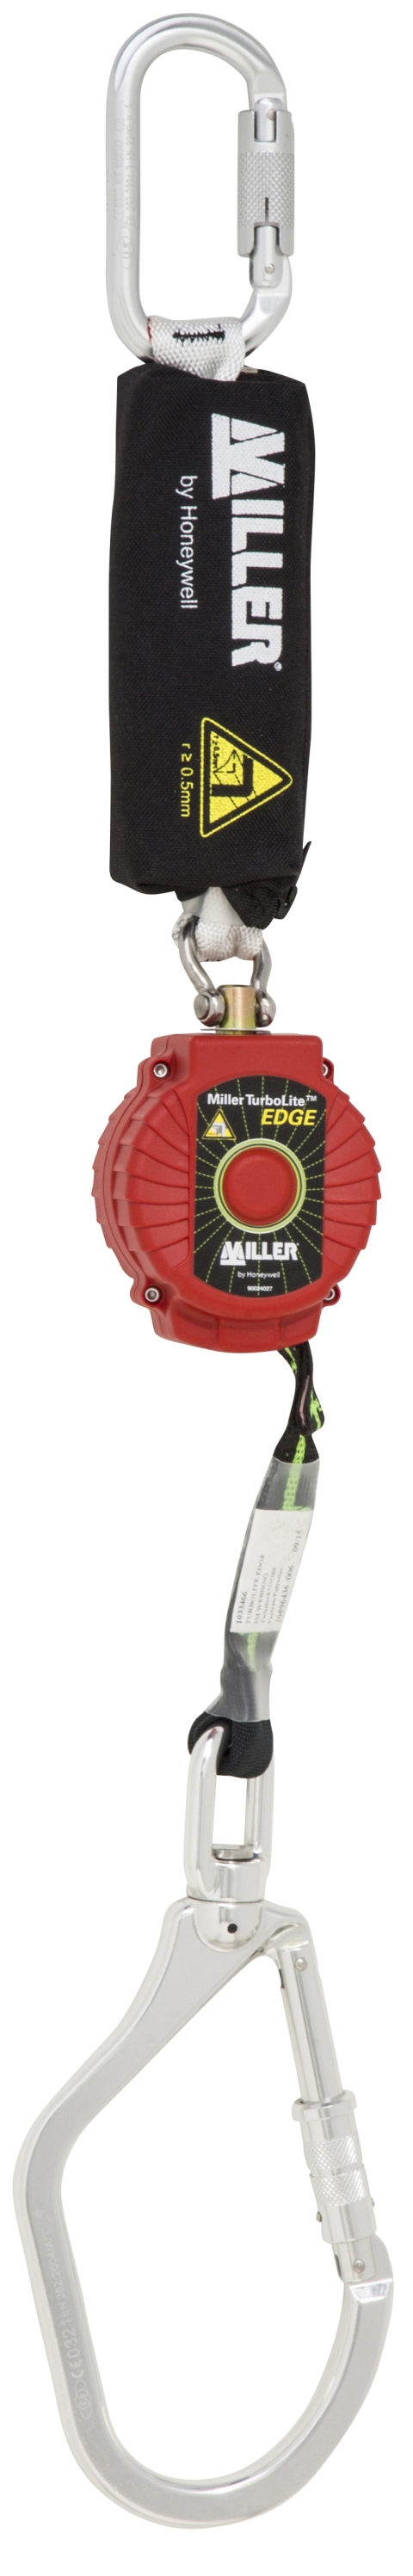 20160122HSP005723 - Miller TurboLite Edge - product image